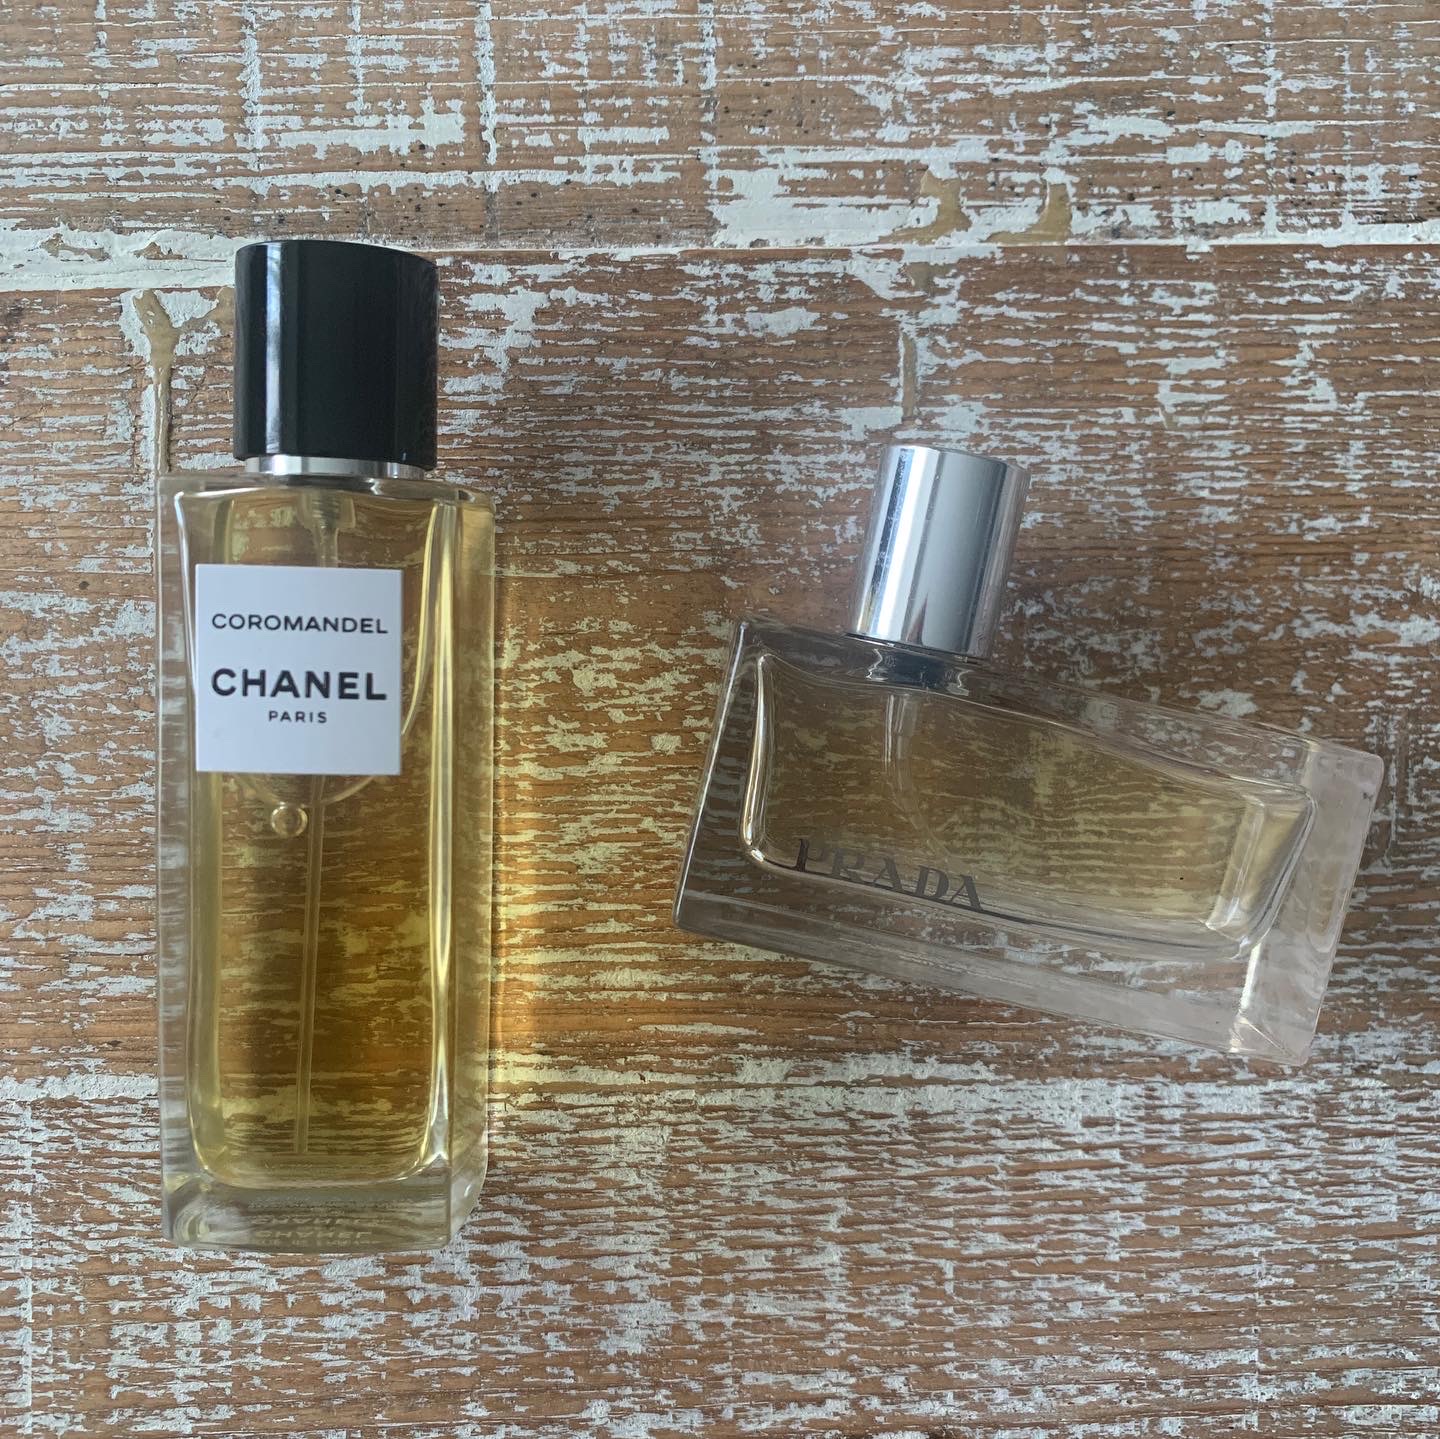 Prada Amber vs. Chanel Coromandel